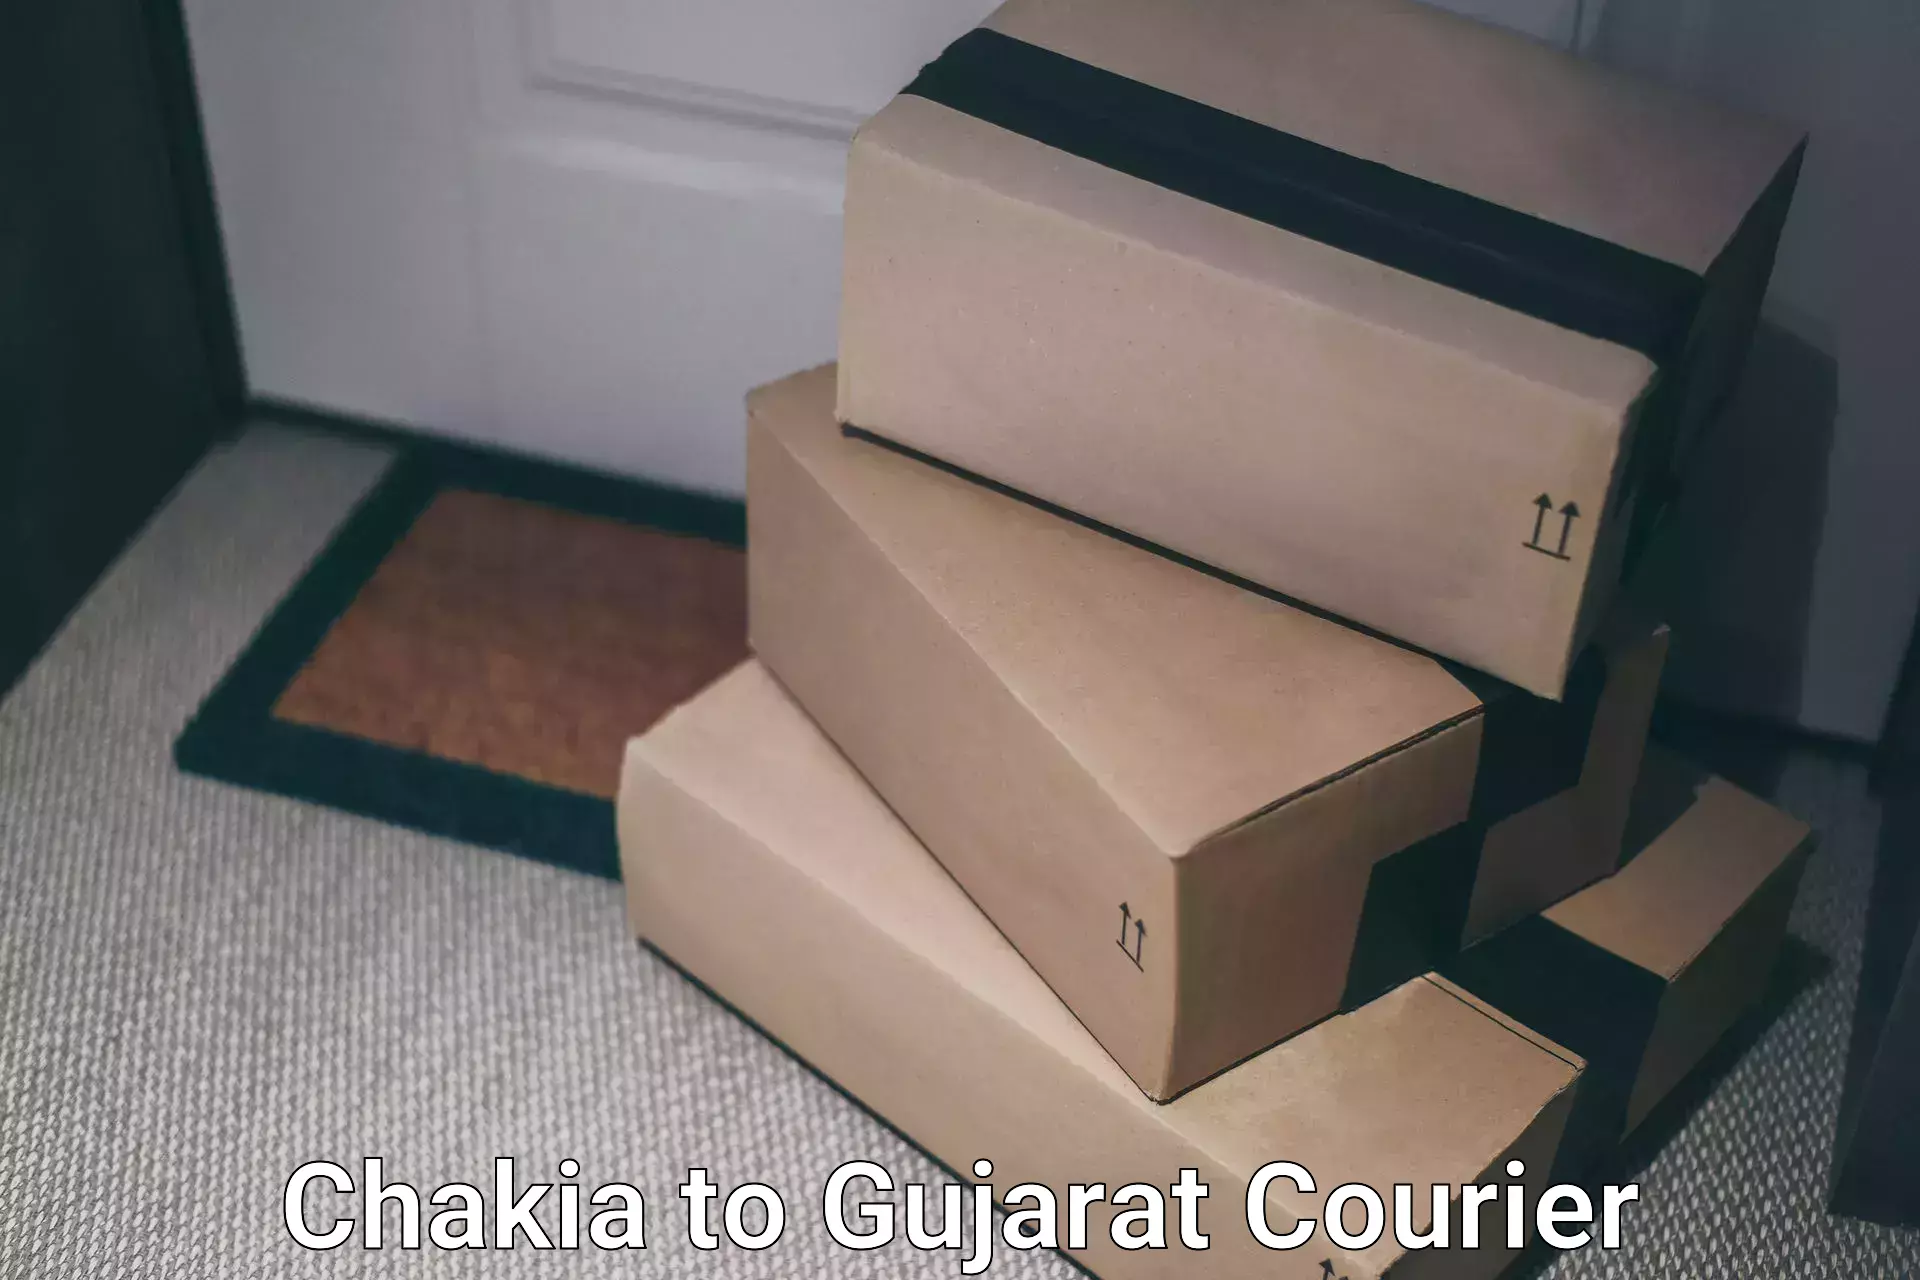 Doorstep delivery service Chakia to Gujarat